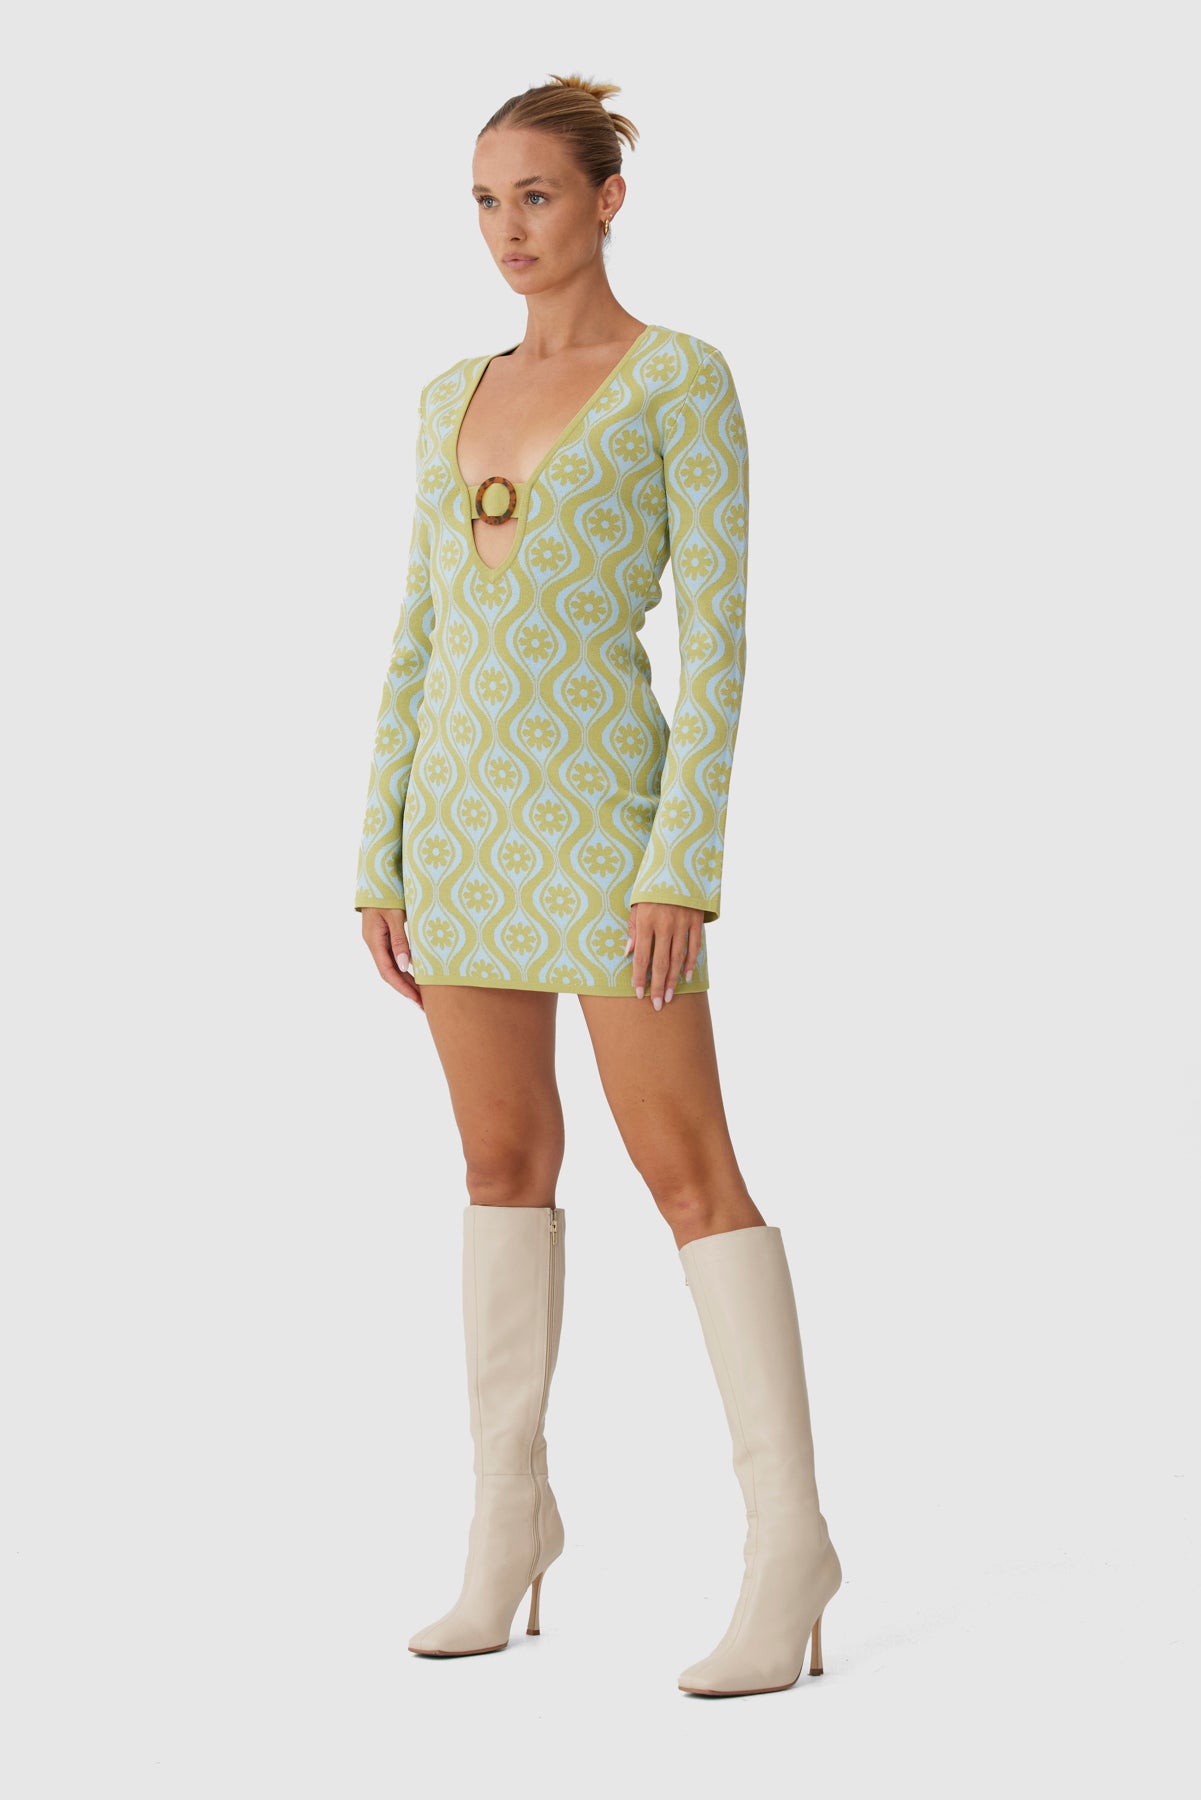 Finders - Quinn Knit Dress - Lime Retro Floral